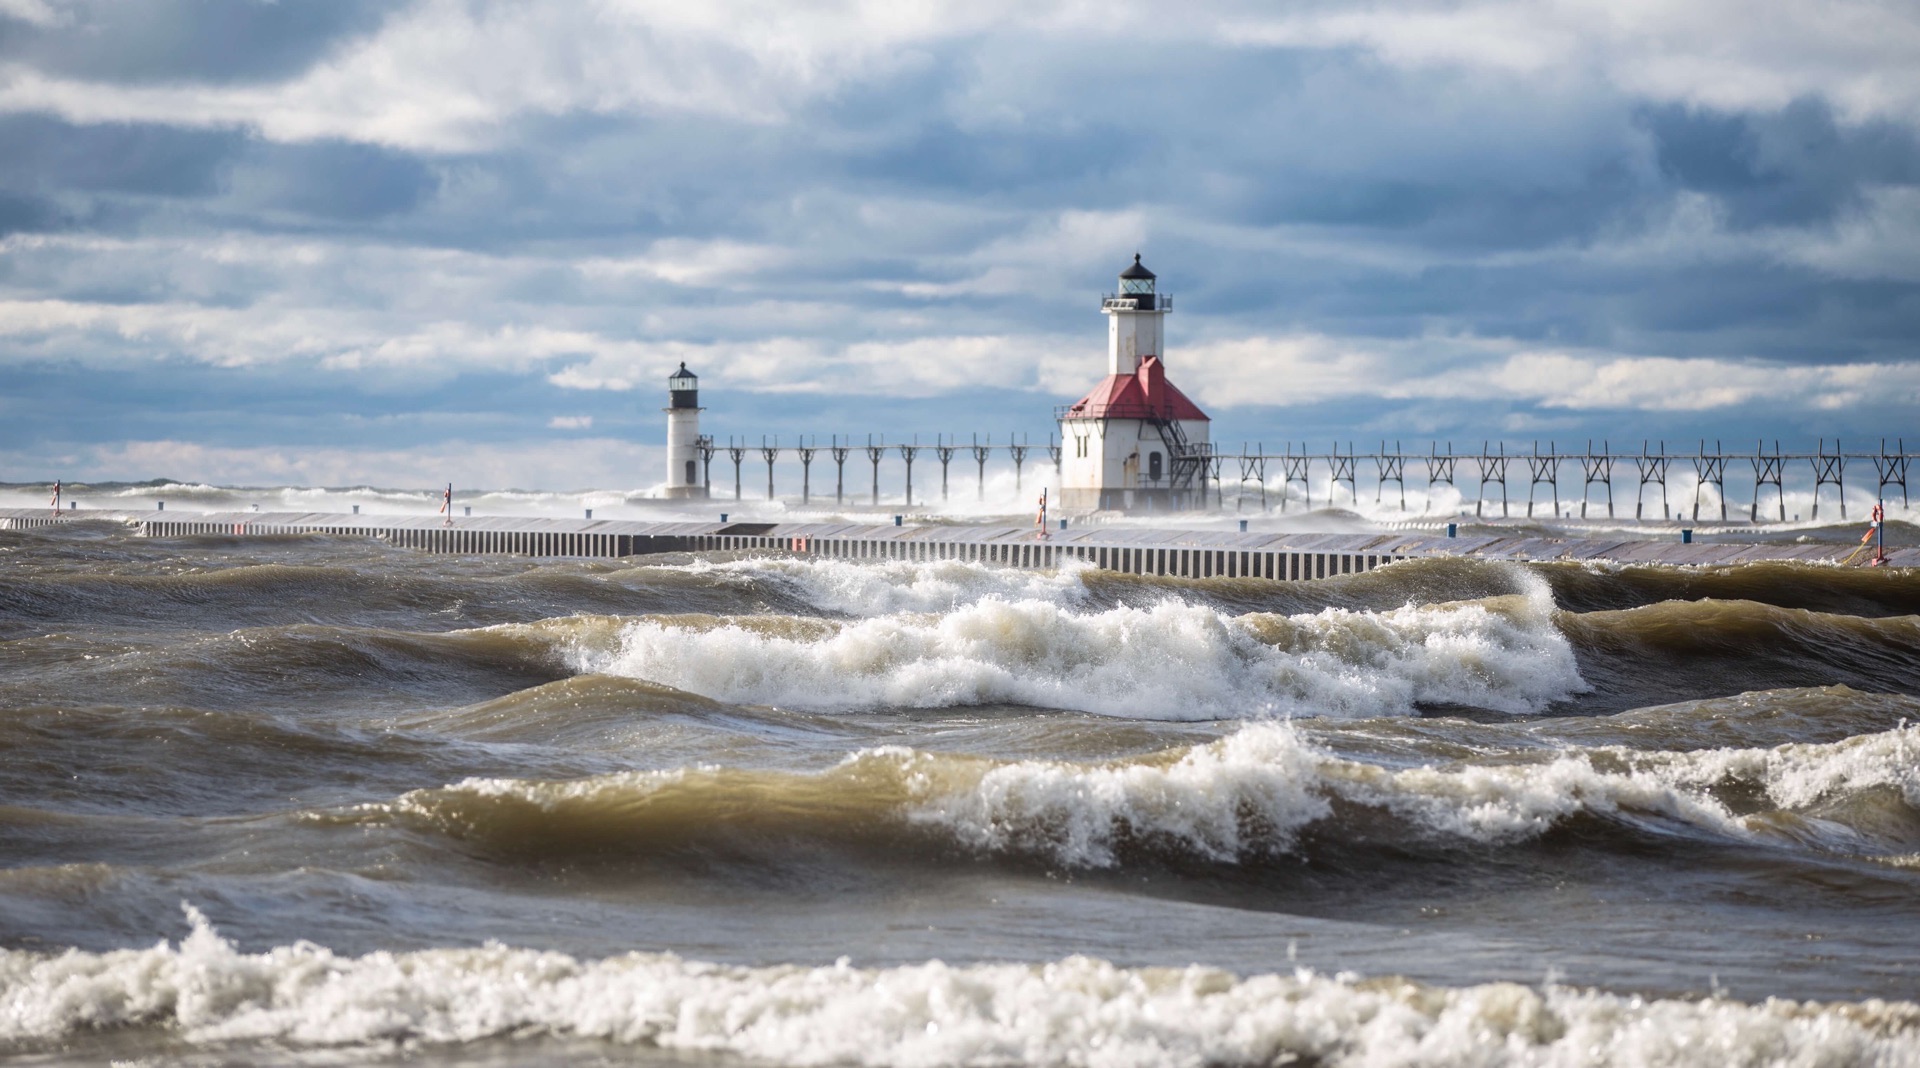 Rough seas on Lake Michigan bash lighthouses and pier